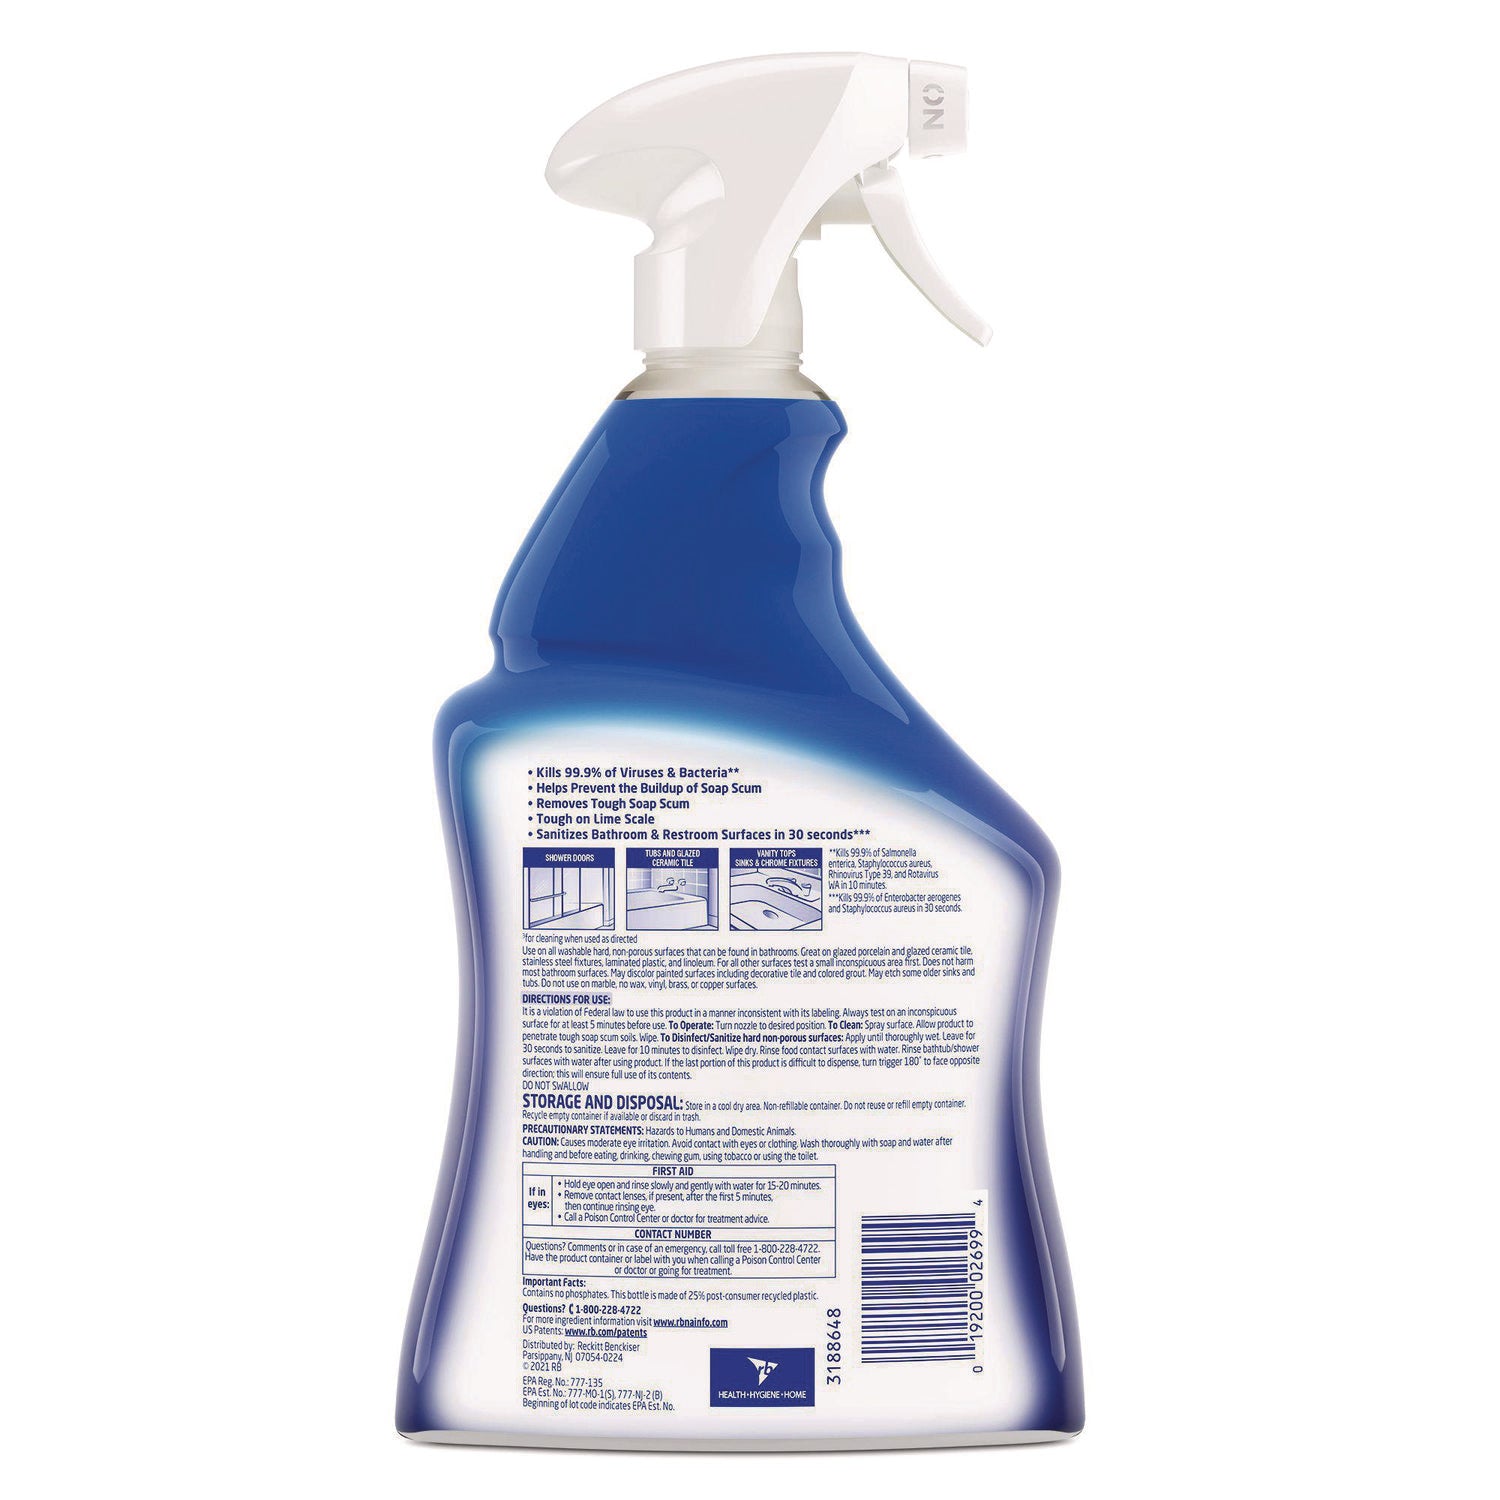 Disinfectant Power Bathroom Foamer, Liquid, Atlantic Fresh, 32 oz Spray Bottle - 